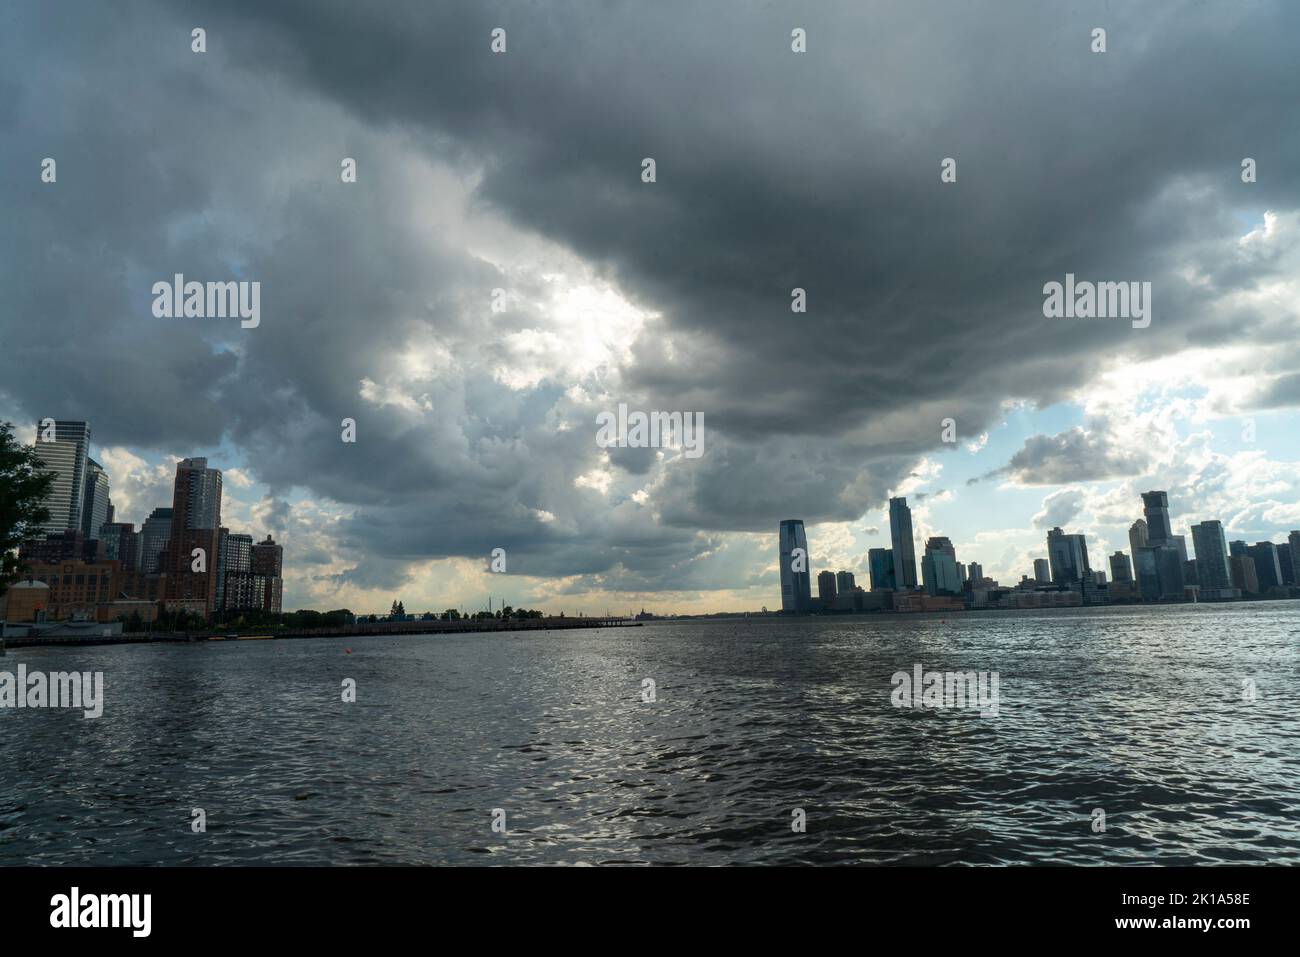 Der Hudson River mit Sturmwolken, der nach Süden in Richtung Battery Park City am Ostufer des Flusses und Jersey City, New Jersey, am Wester blickt Stockfoto